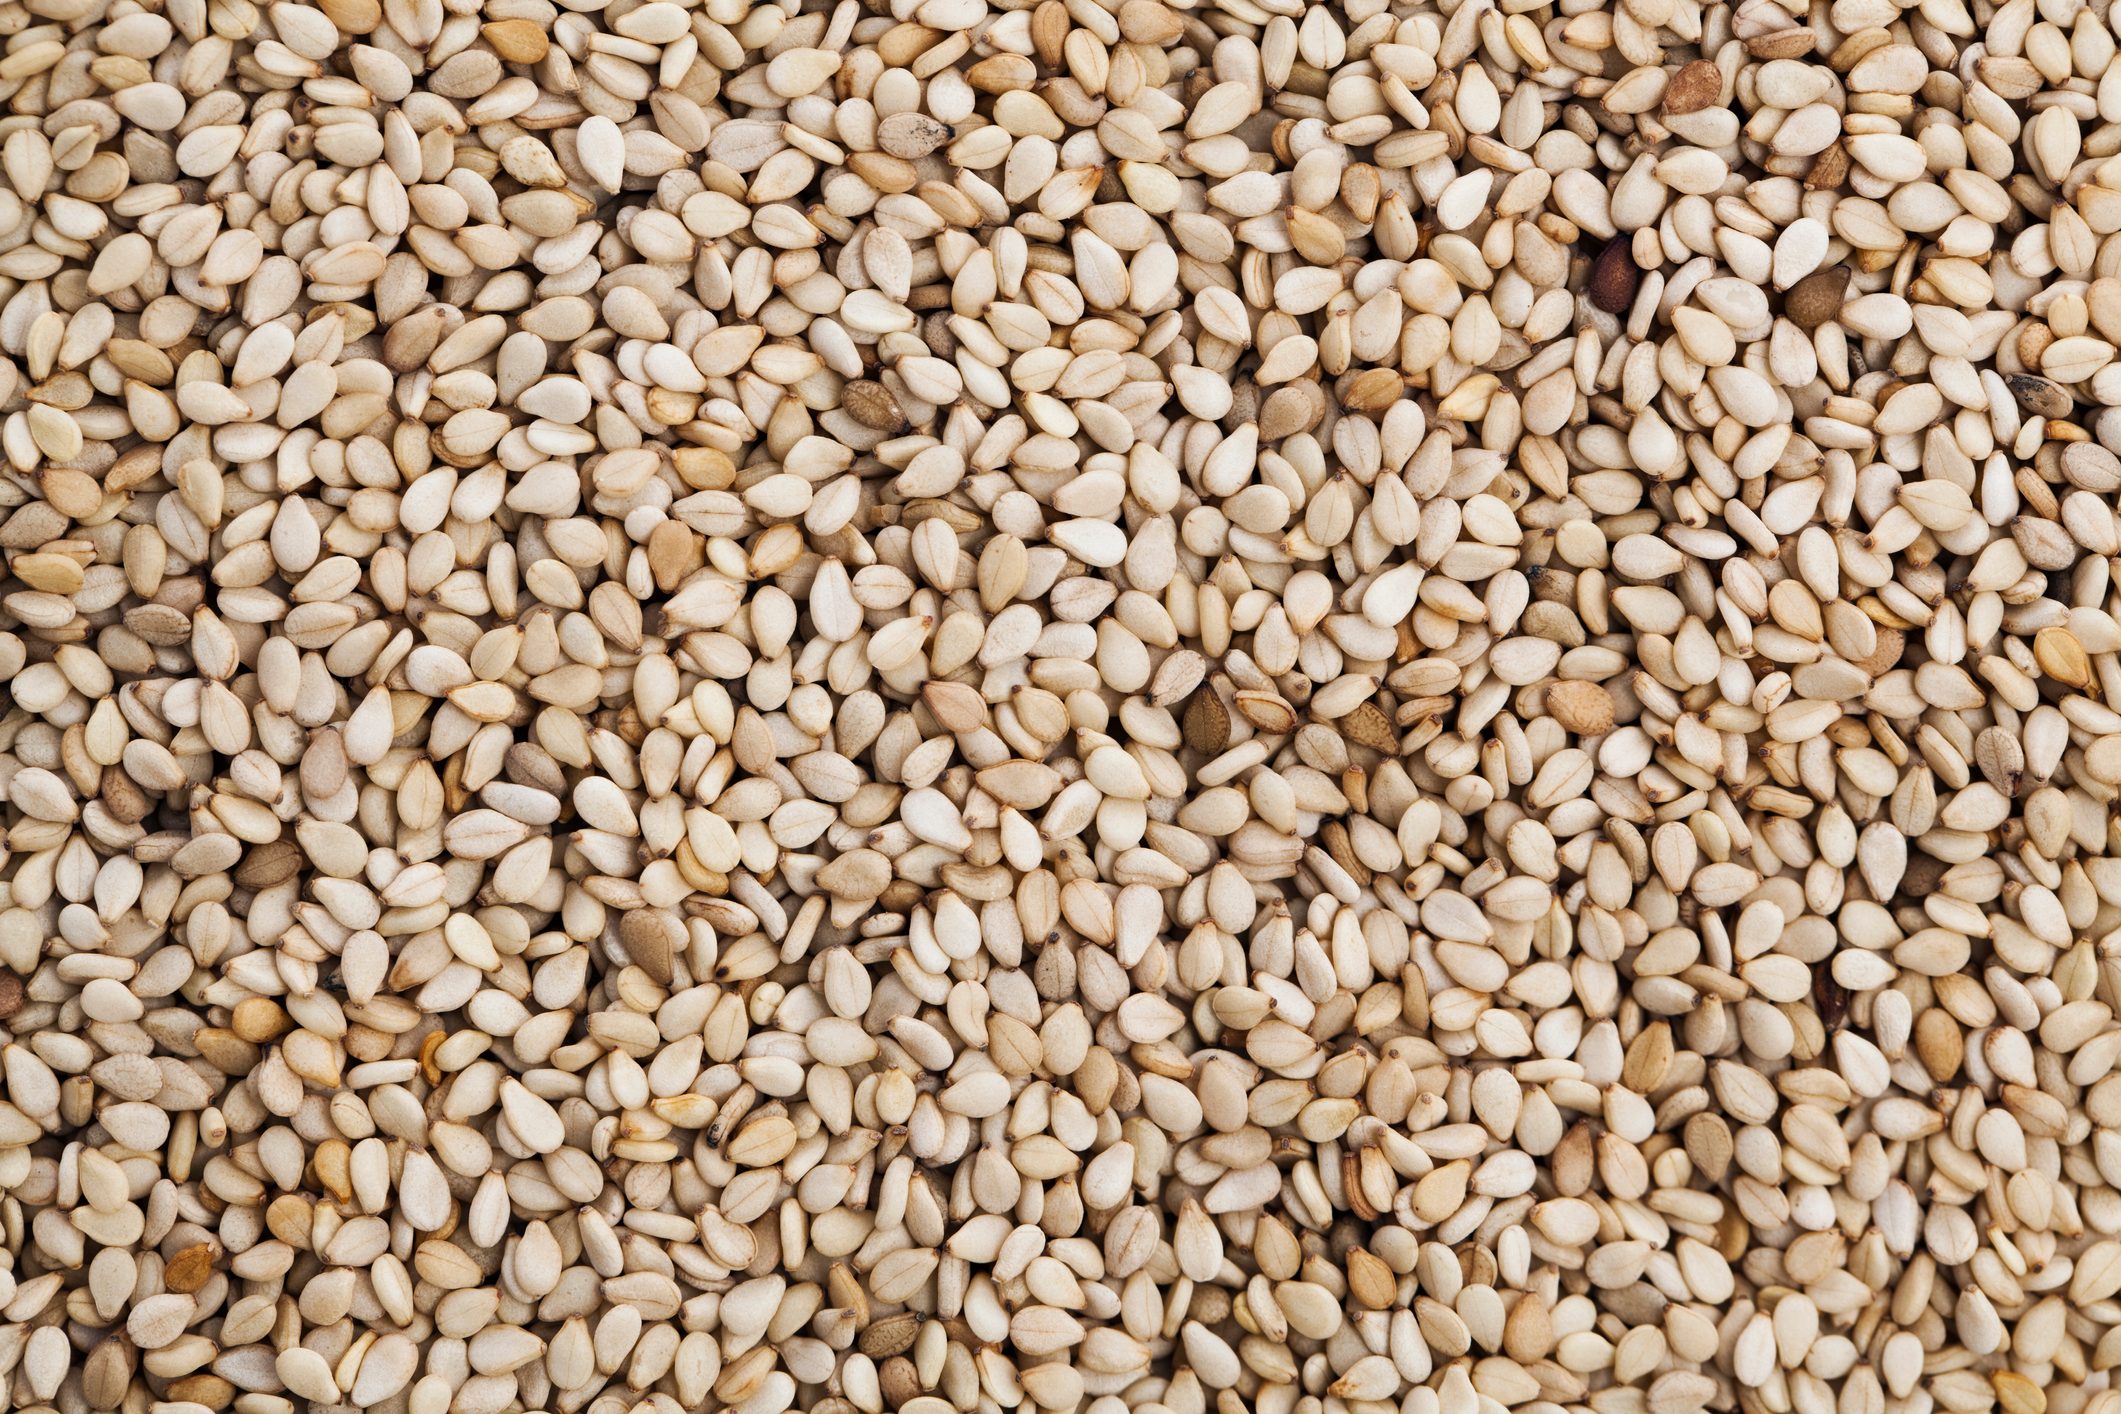 Black Sesame Seeds: Nutrition, Benefits, and More